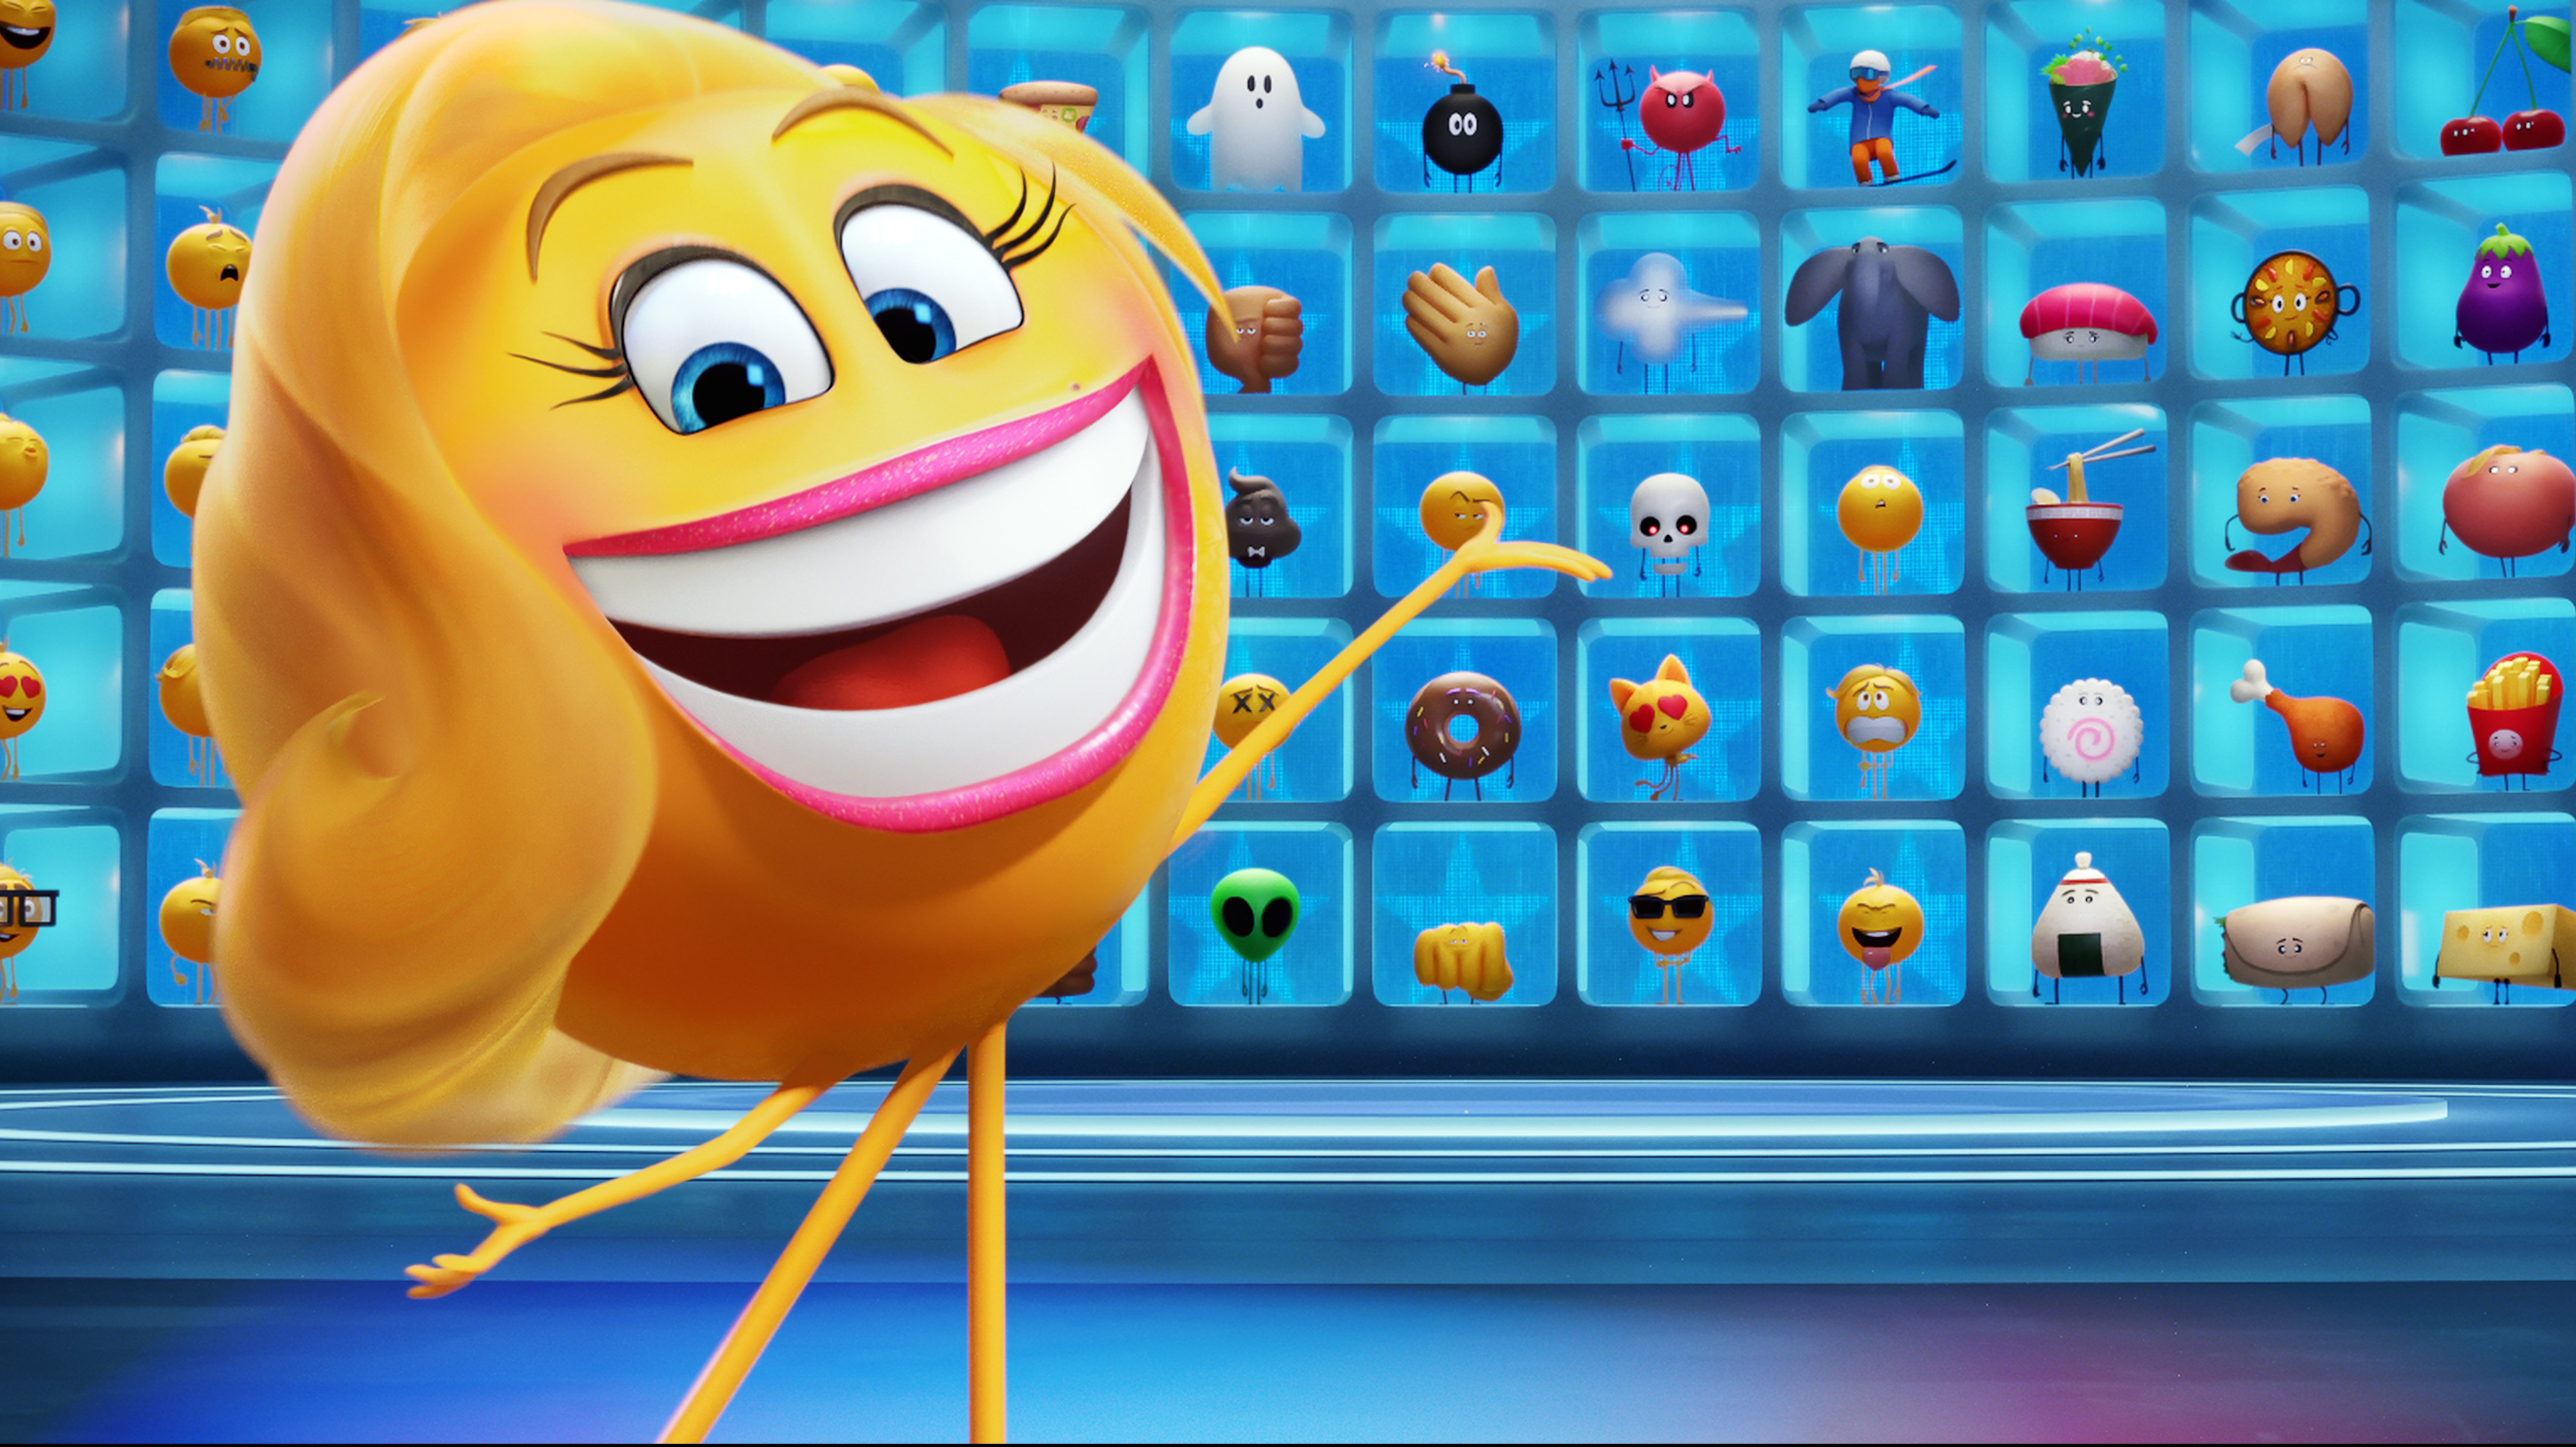 The Emoji HD Wallpapers | 4K Backgrounds - Wallpapers Den